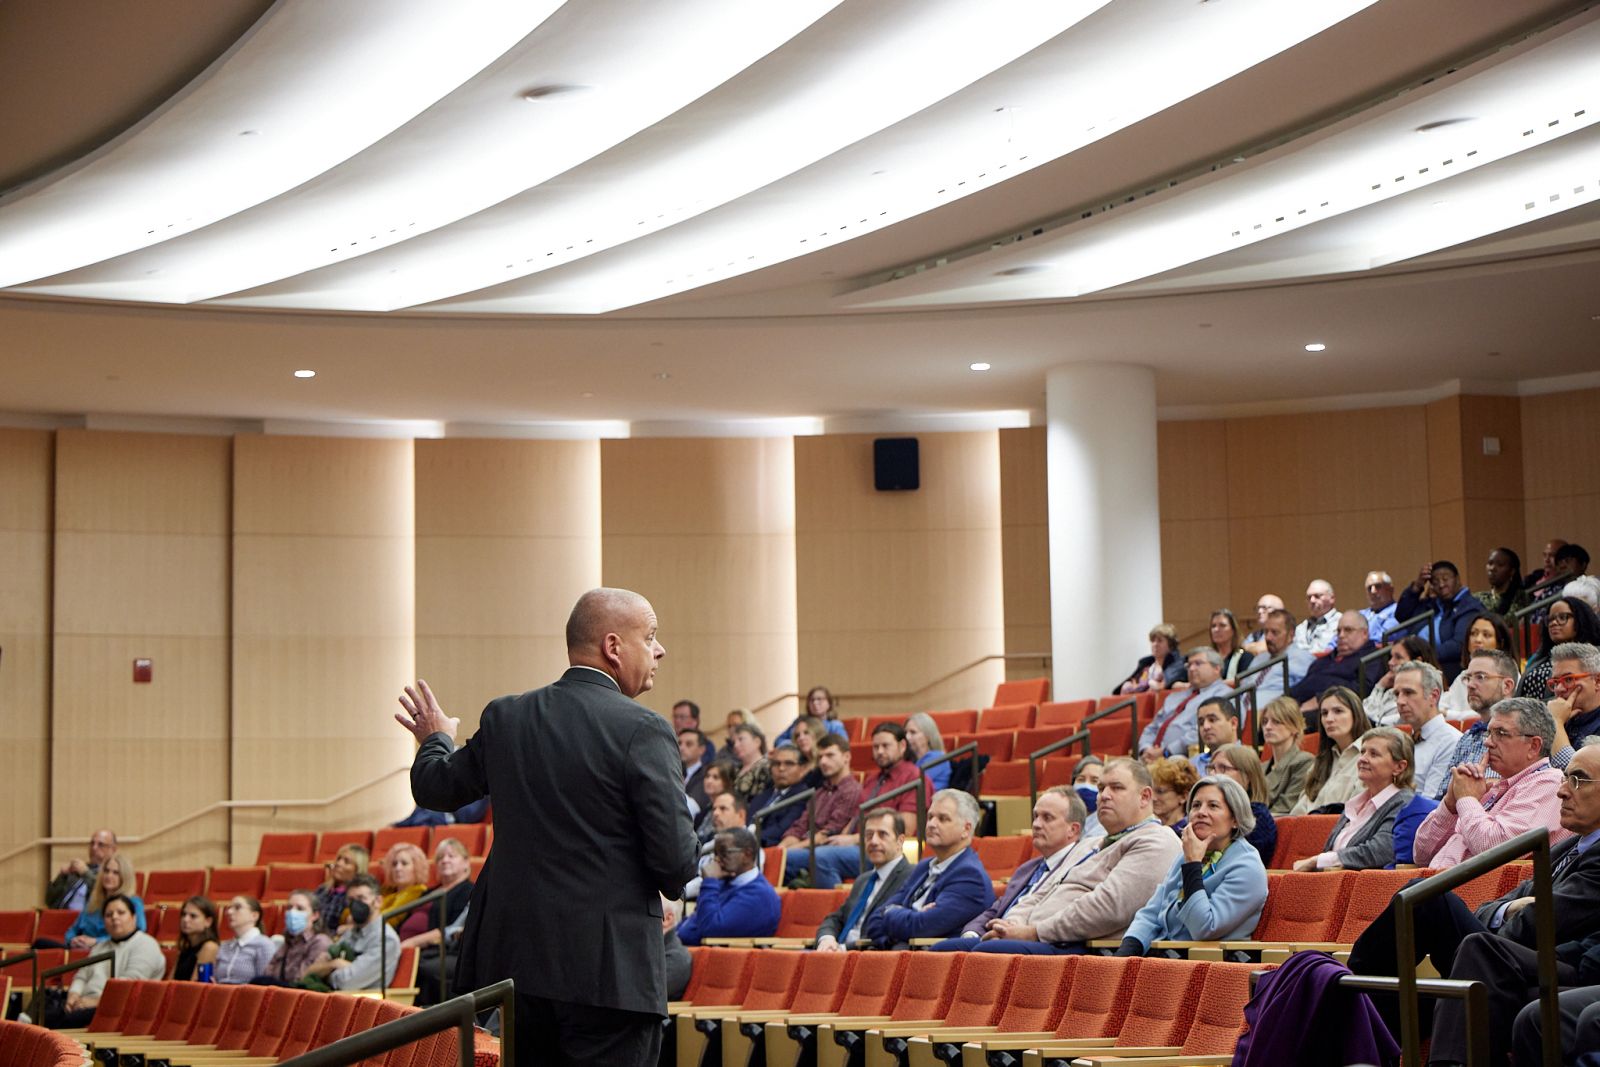 Photo of Yale's Anthony Kosior speaking to auditorium of Facilities Officxe employees